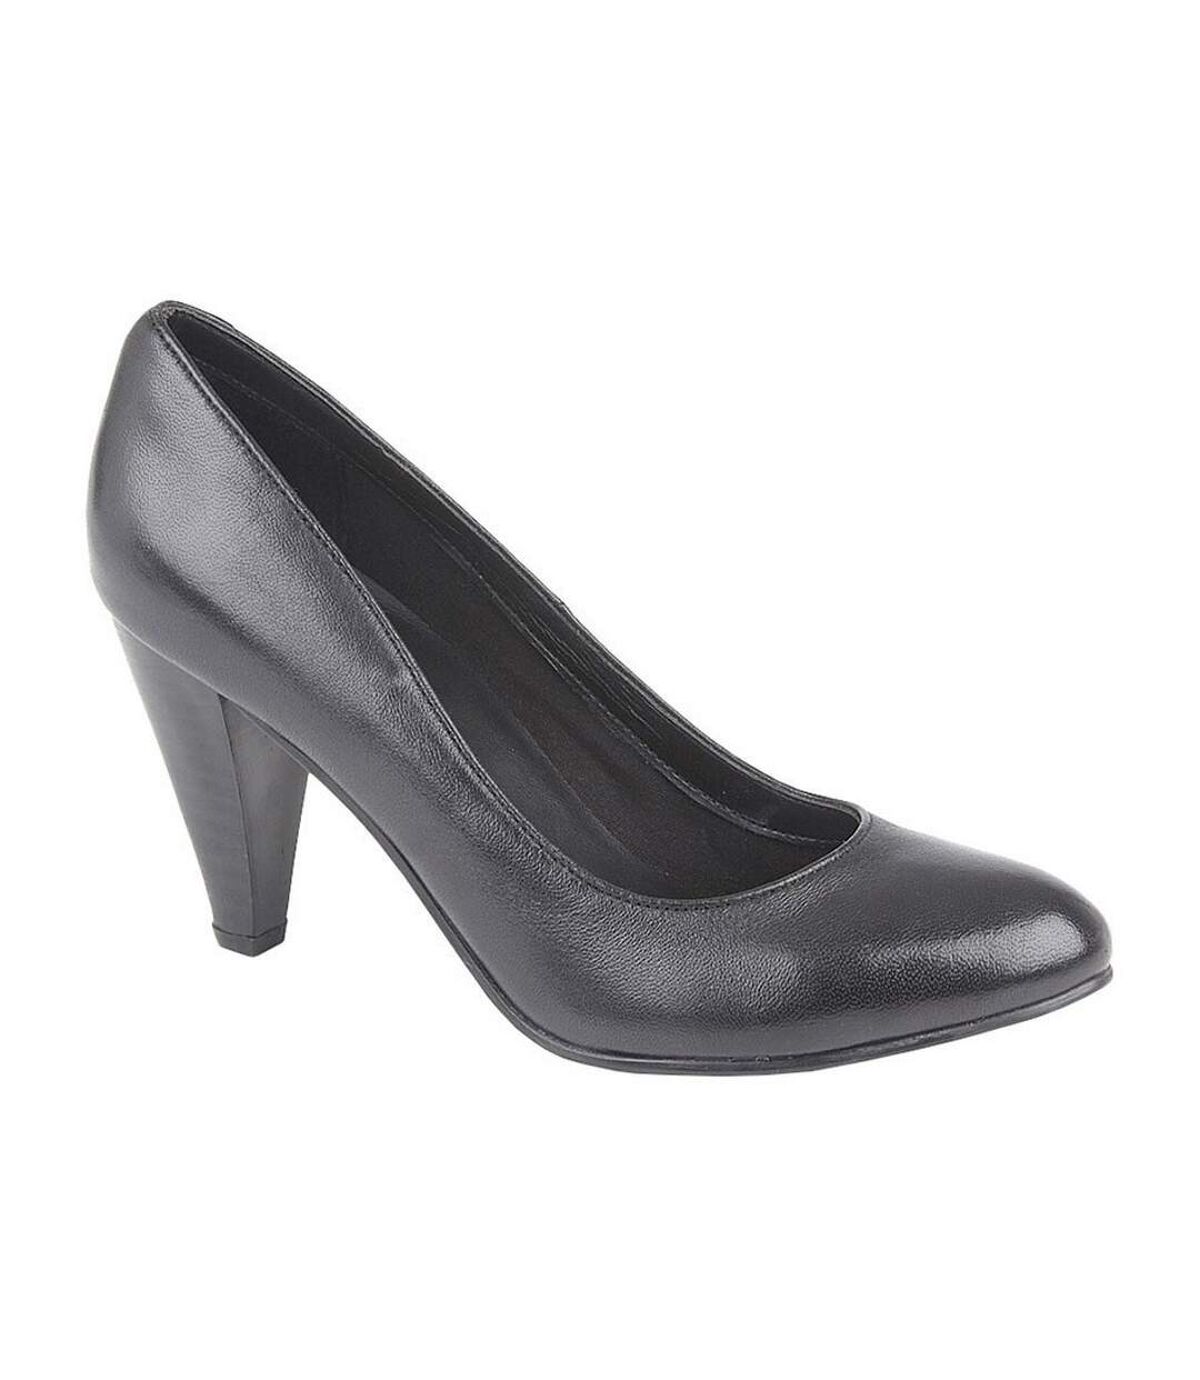 Mod Comfys Womens/Ladies Heel Plain Leather Court Shoes (Black) - UTDF1893